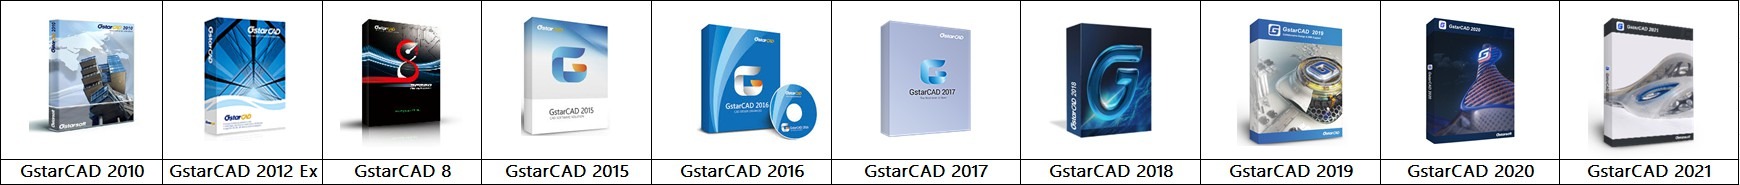 AutoCAD ออโต้แคด : Timeline Box GstarCAD 2007-2021